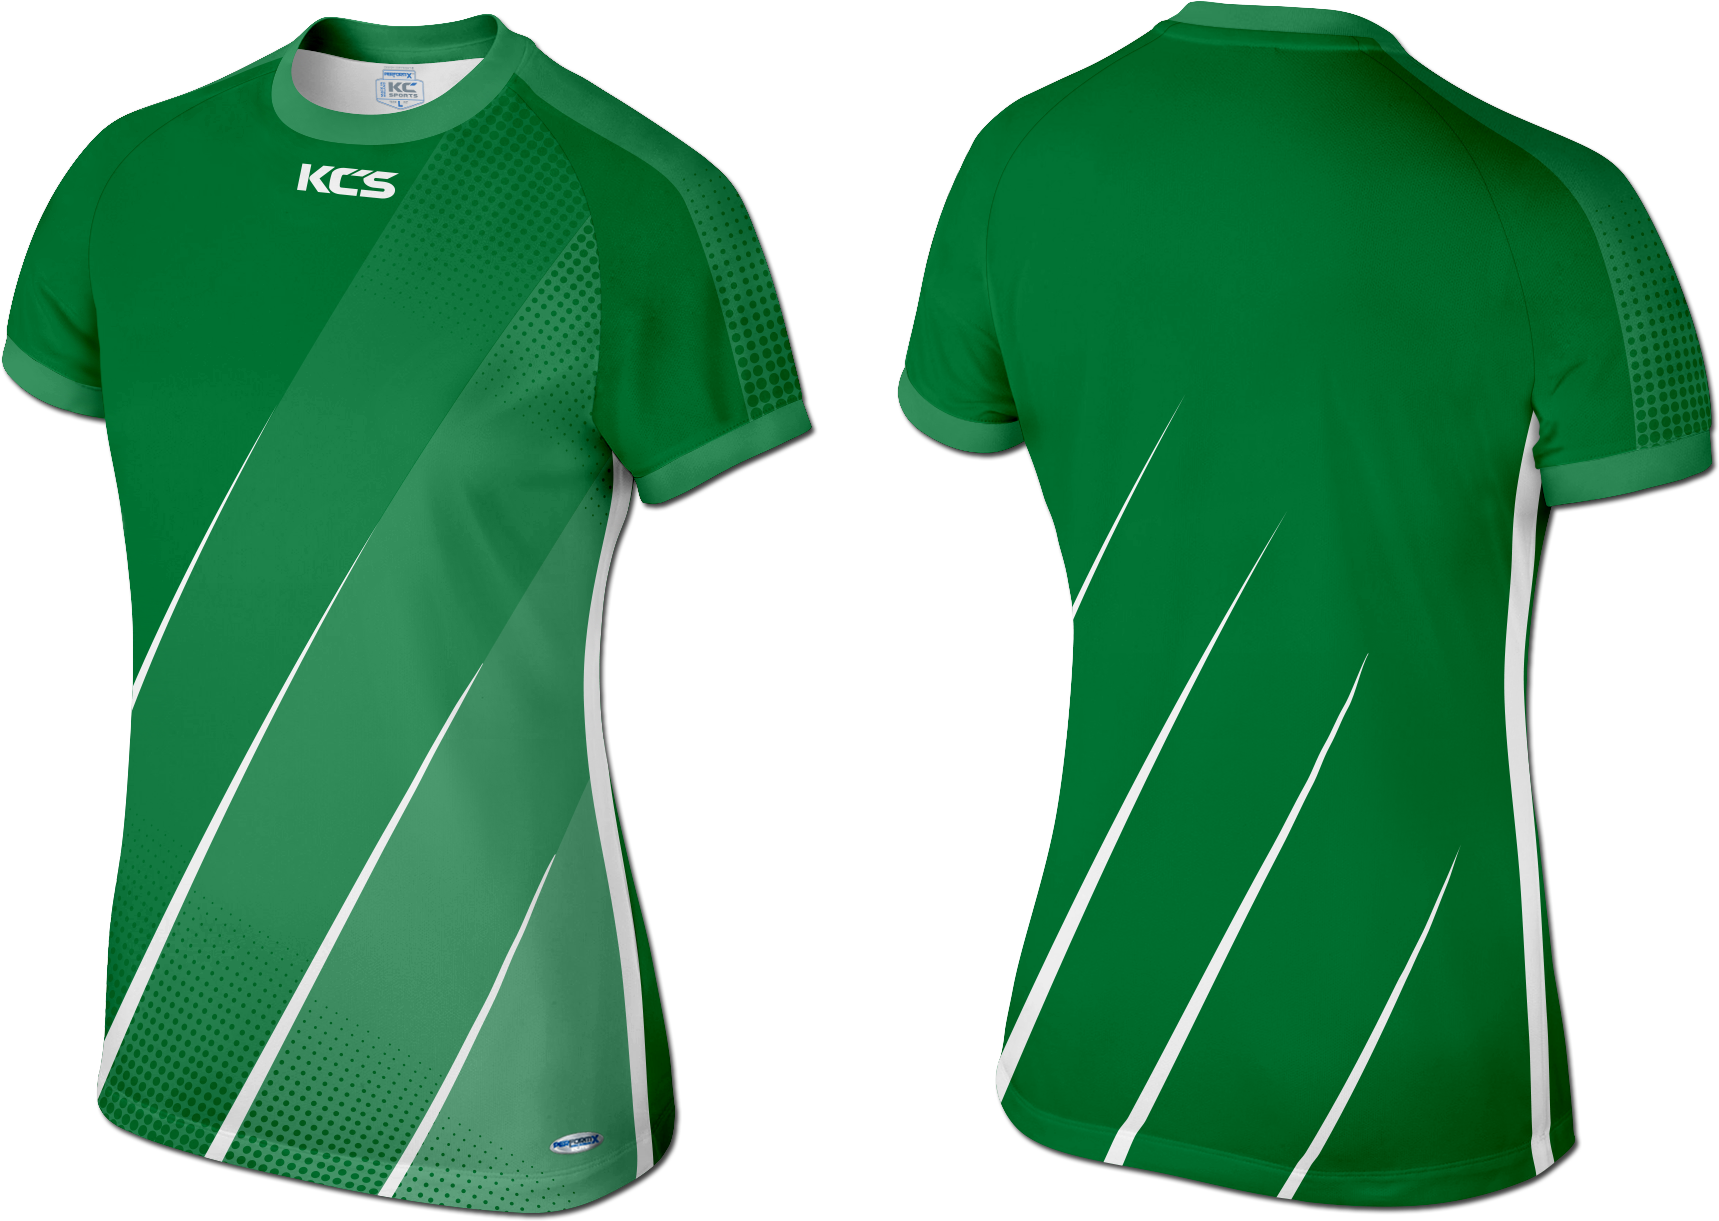 Kcs Ty Jersey Design - Active Shirt (1800x1800)